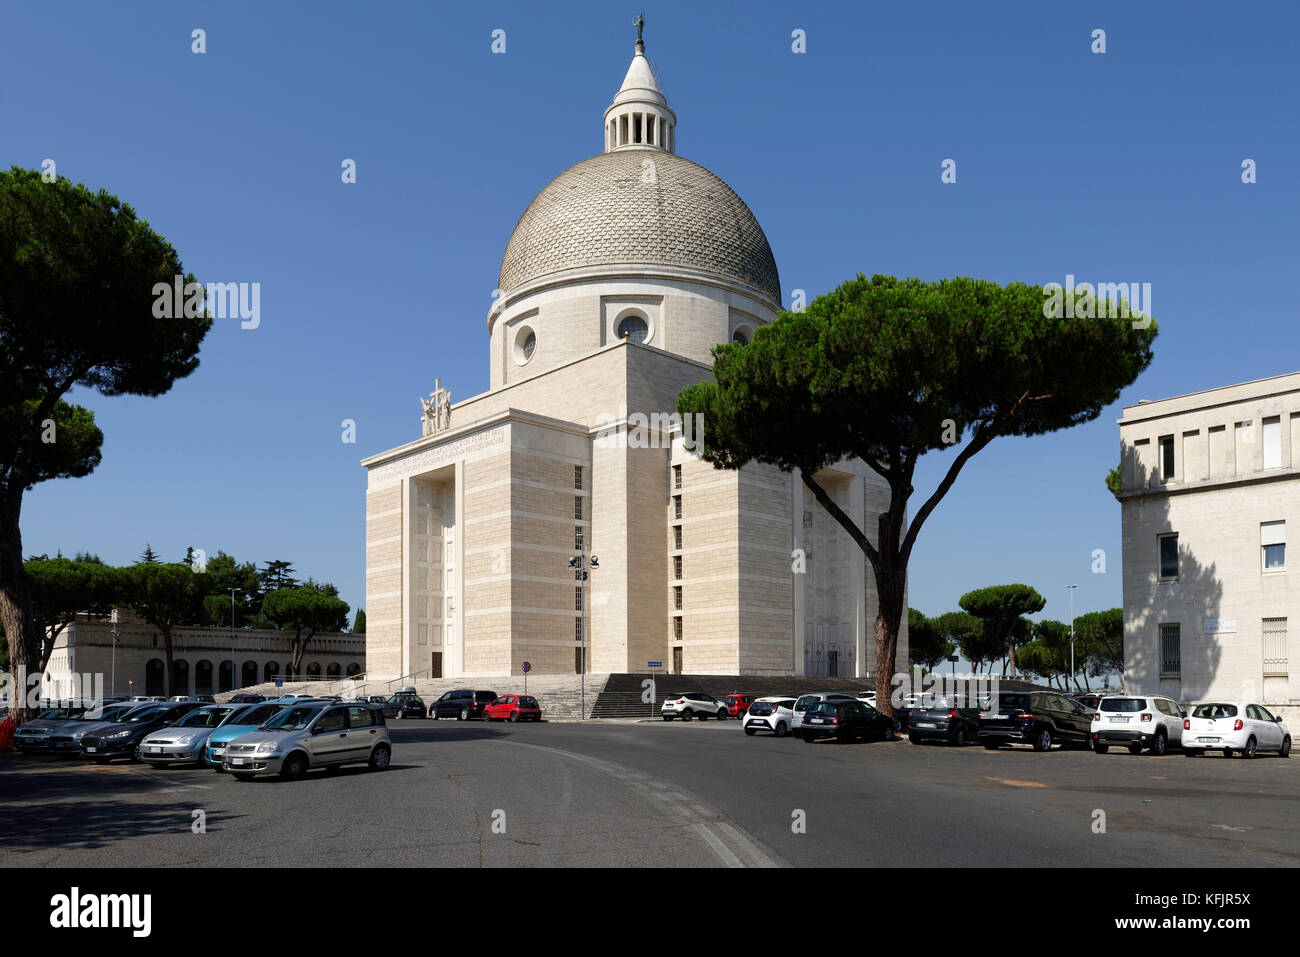 Blick auf die Basilika der Heiligen Peter und Paul (Basilika dei Santi Pietro e Paolo). EUR, Rom, Italien. Stockfoto